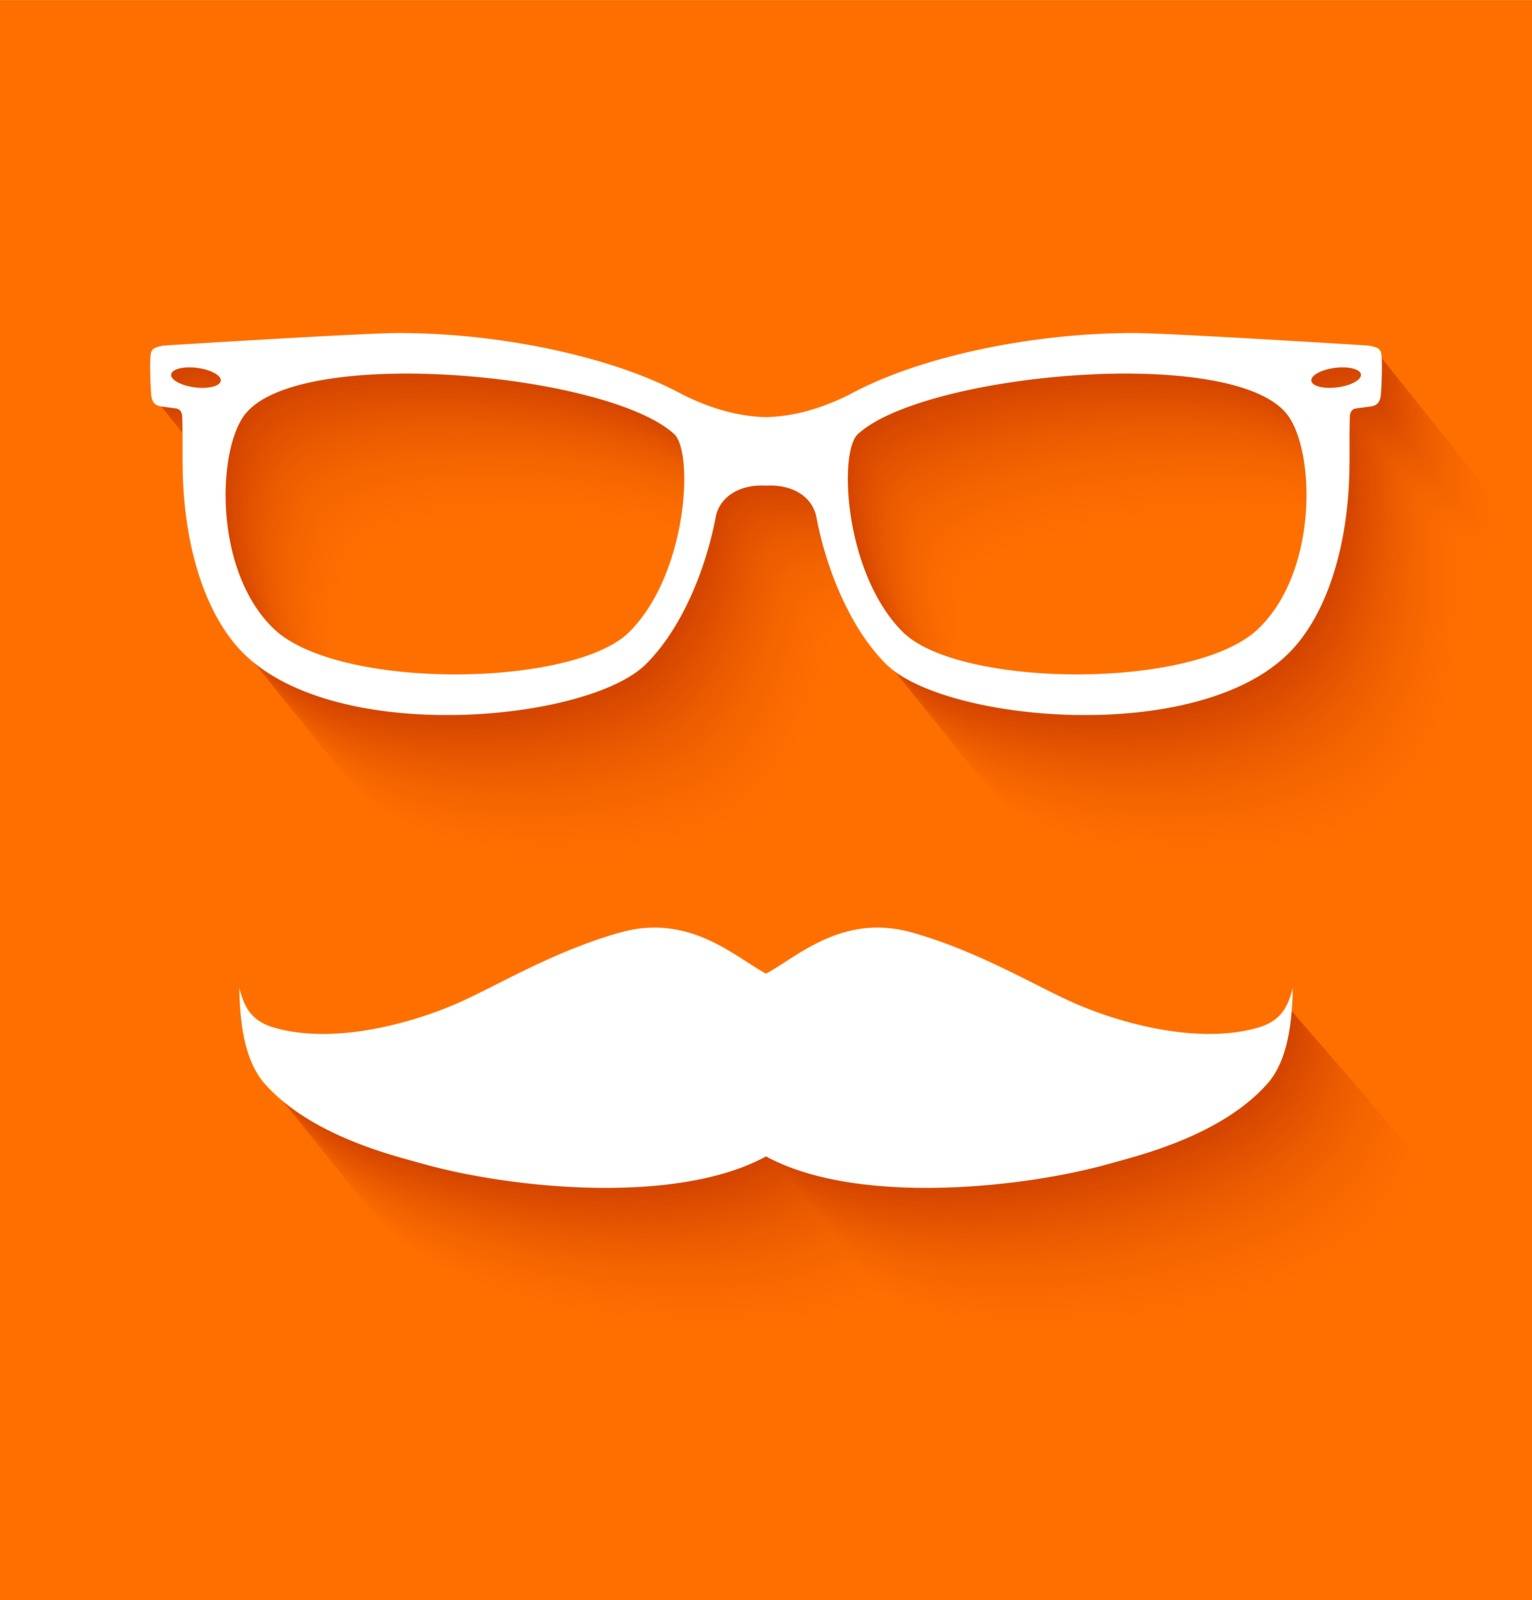 White hipster glasses and mustache on orange background. Vector illustration